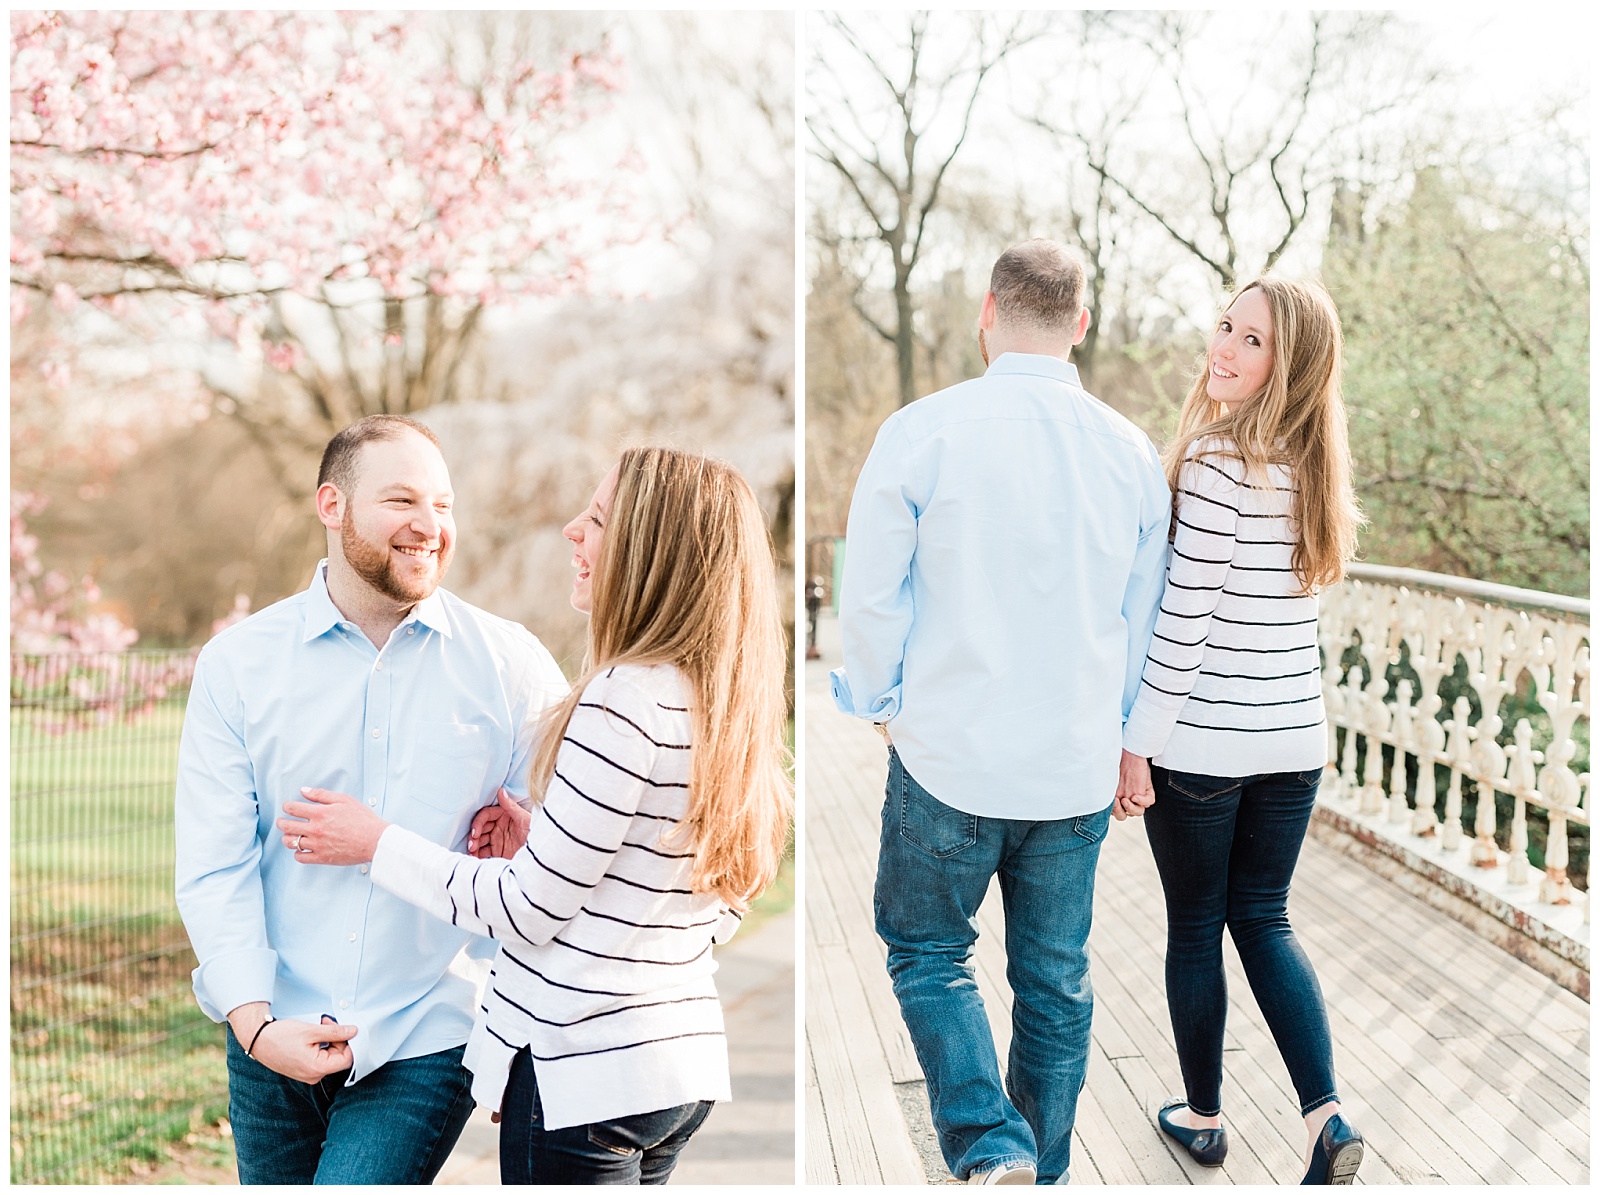 Central Park, NYC engagement session, springtime, wedding photographer, New York, cherry blossom